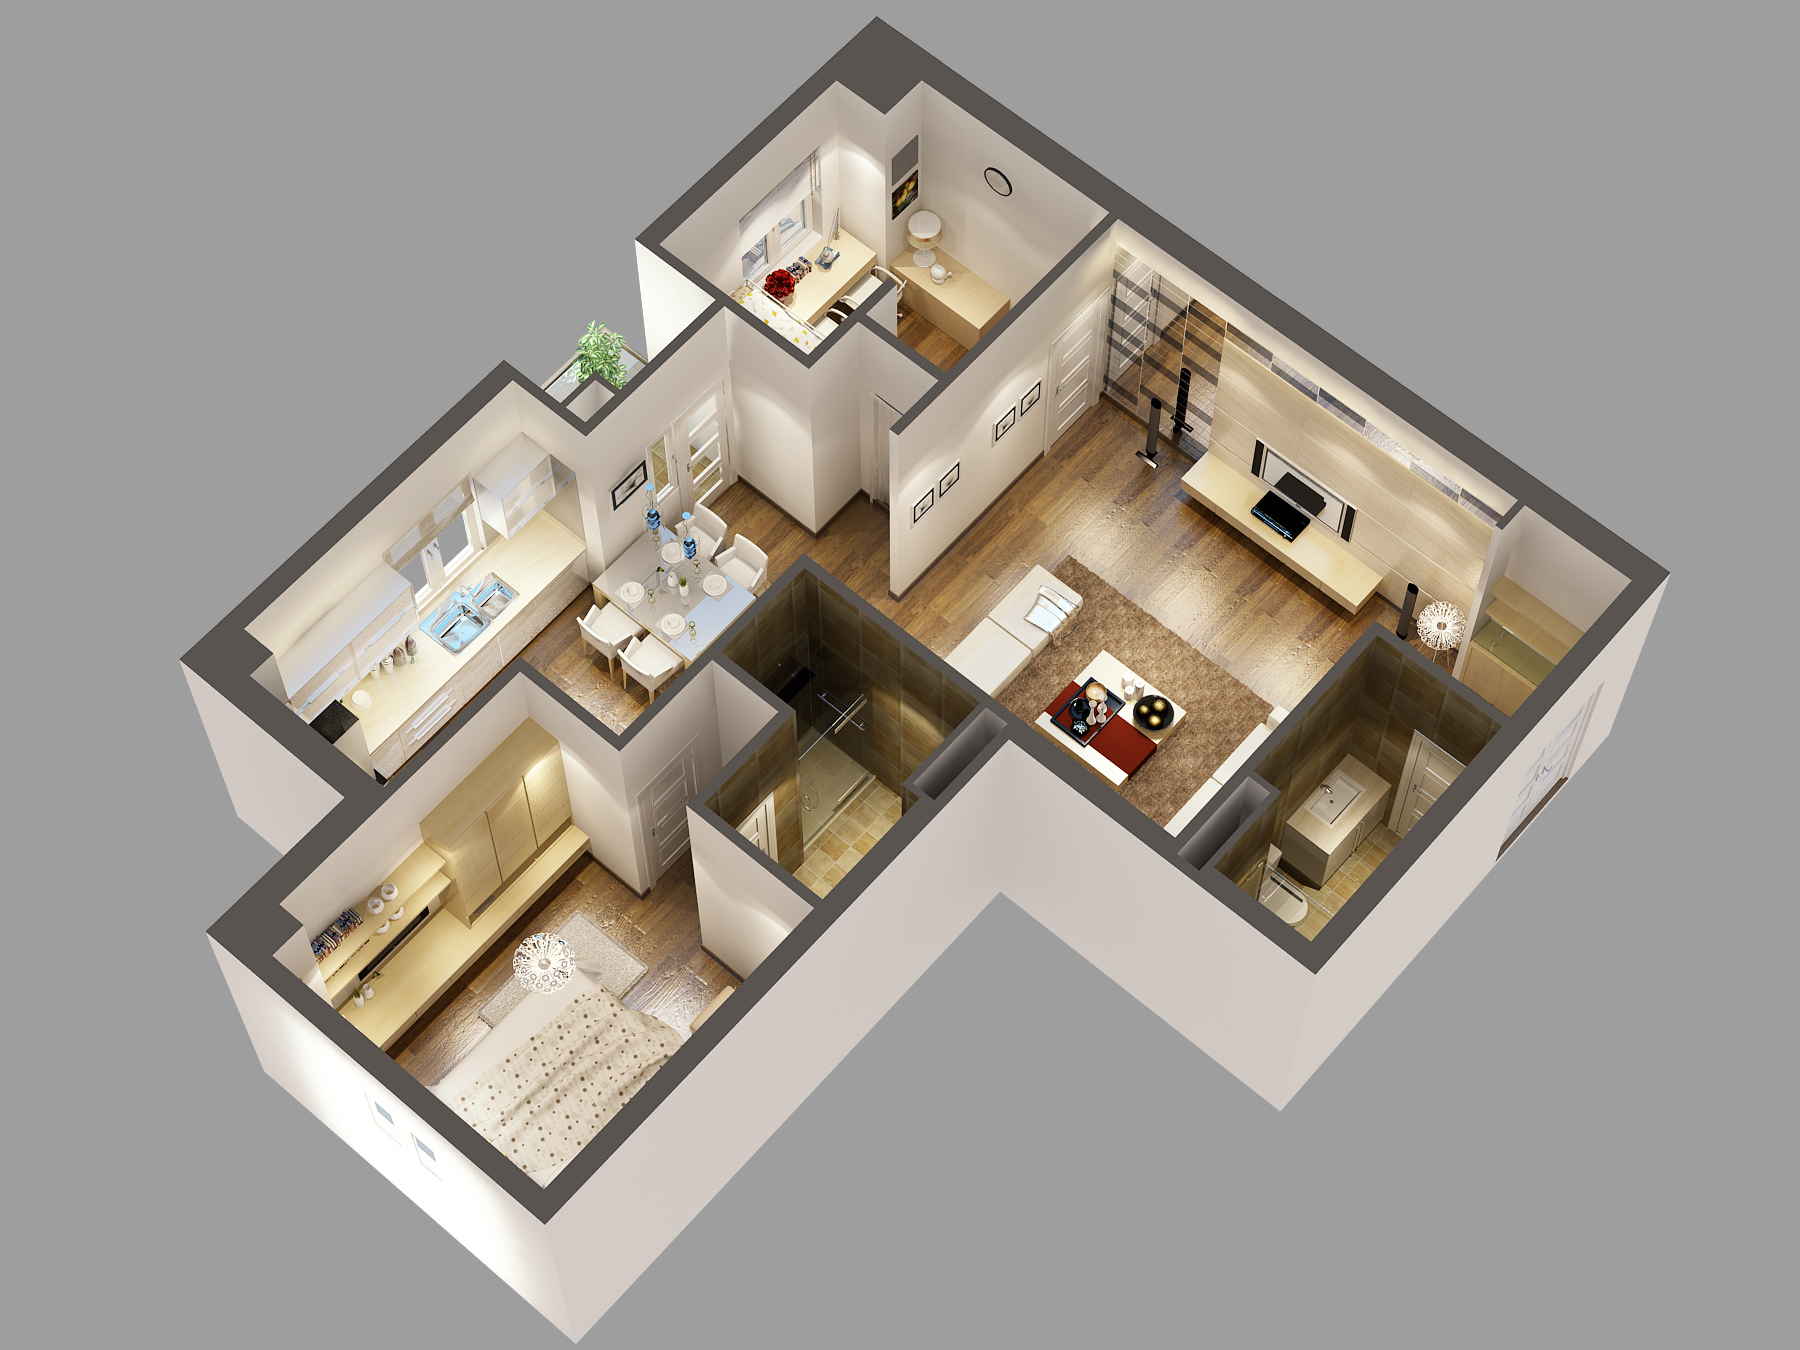 Floor plan 3d model free download » Картинки и фотографии